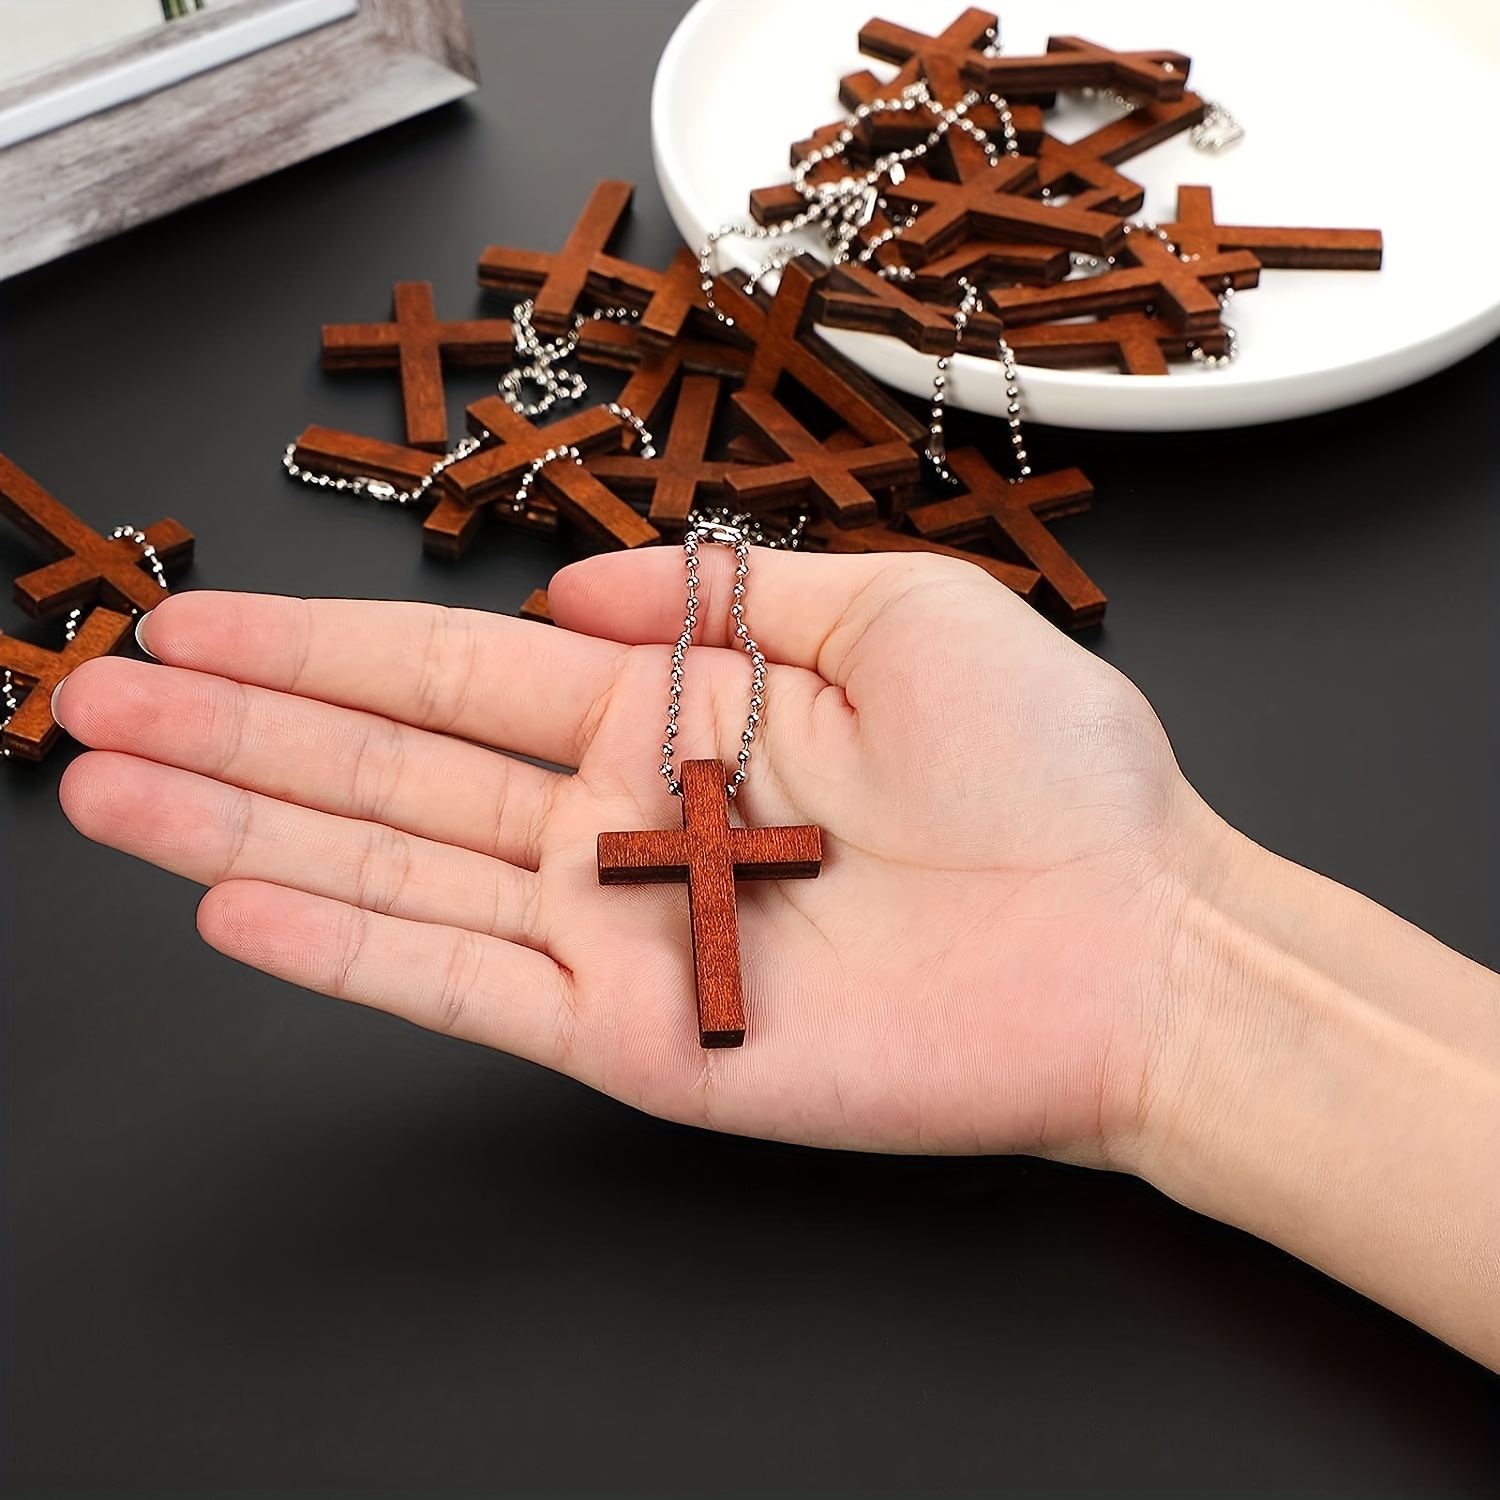 wooden cross necklace for men